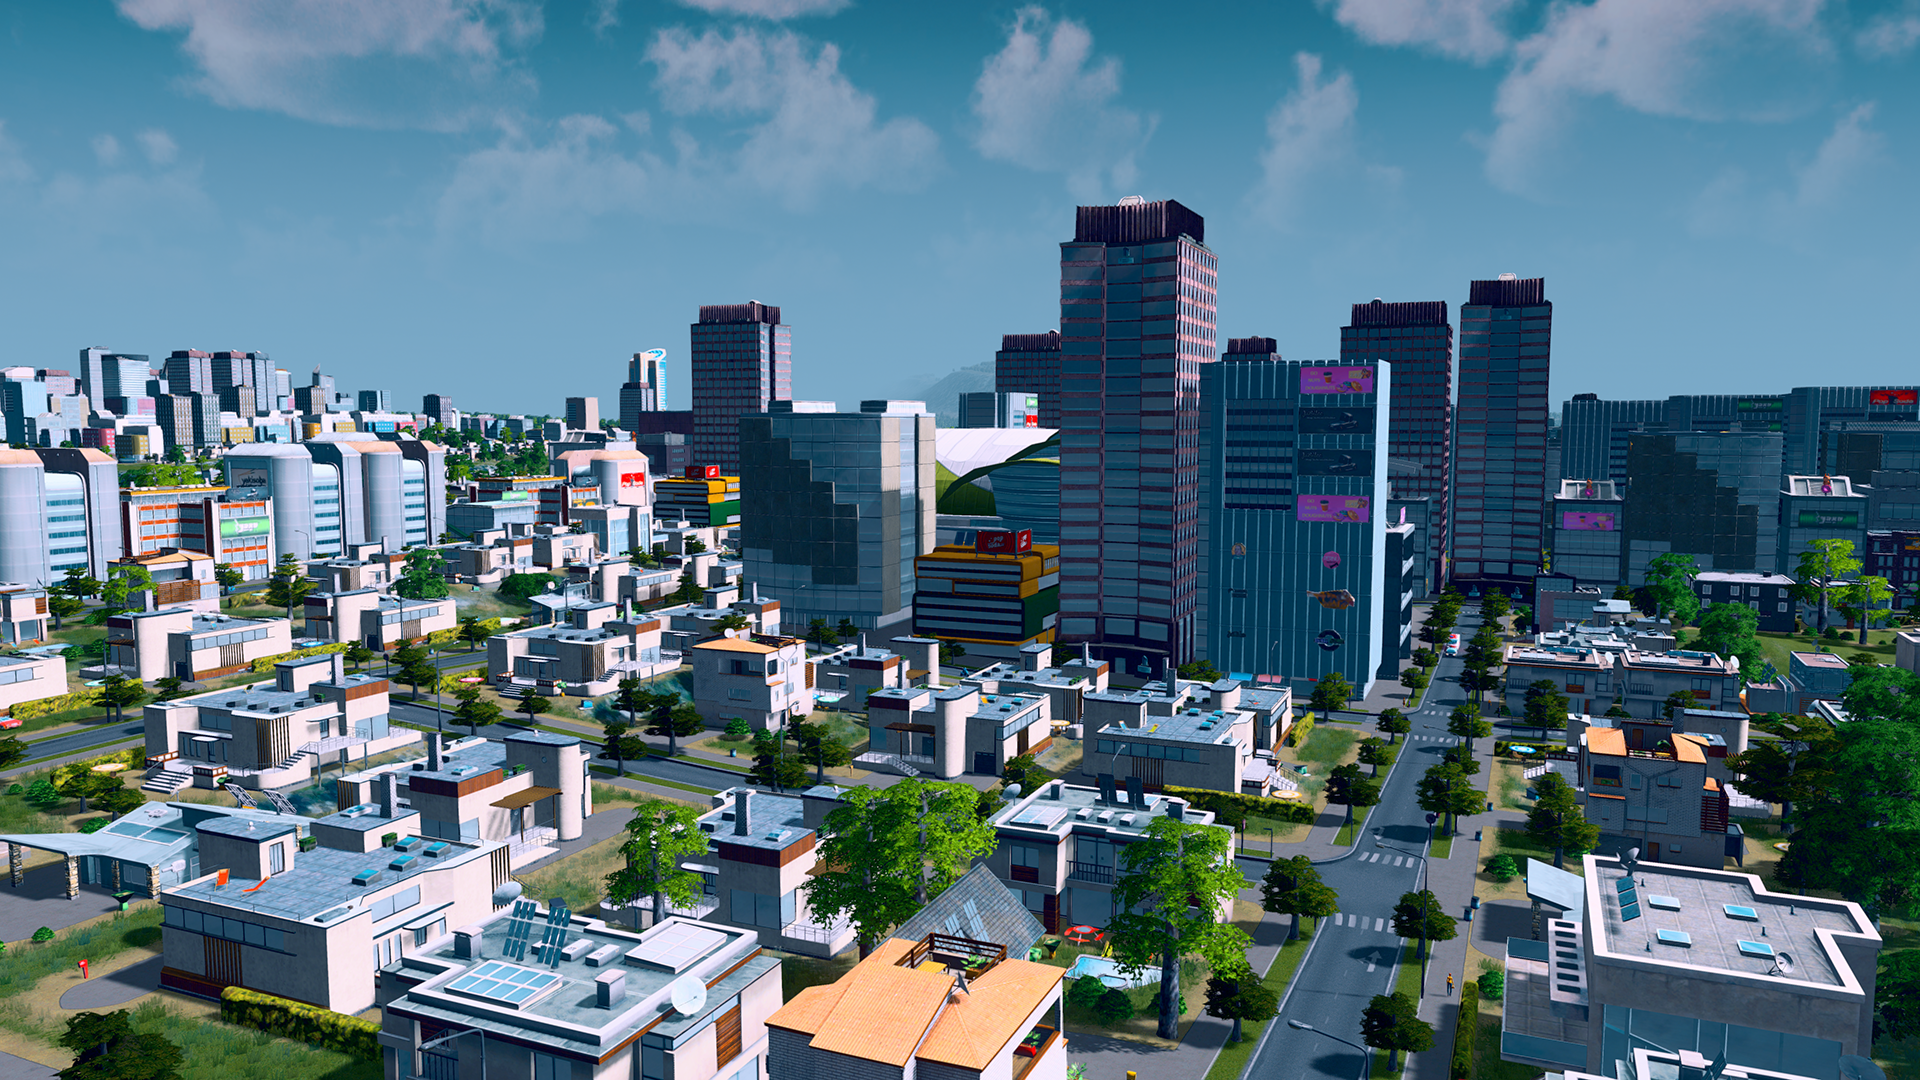 cities skylines game download